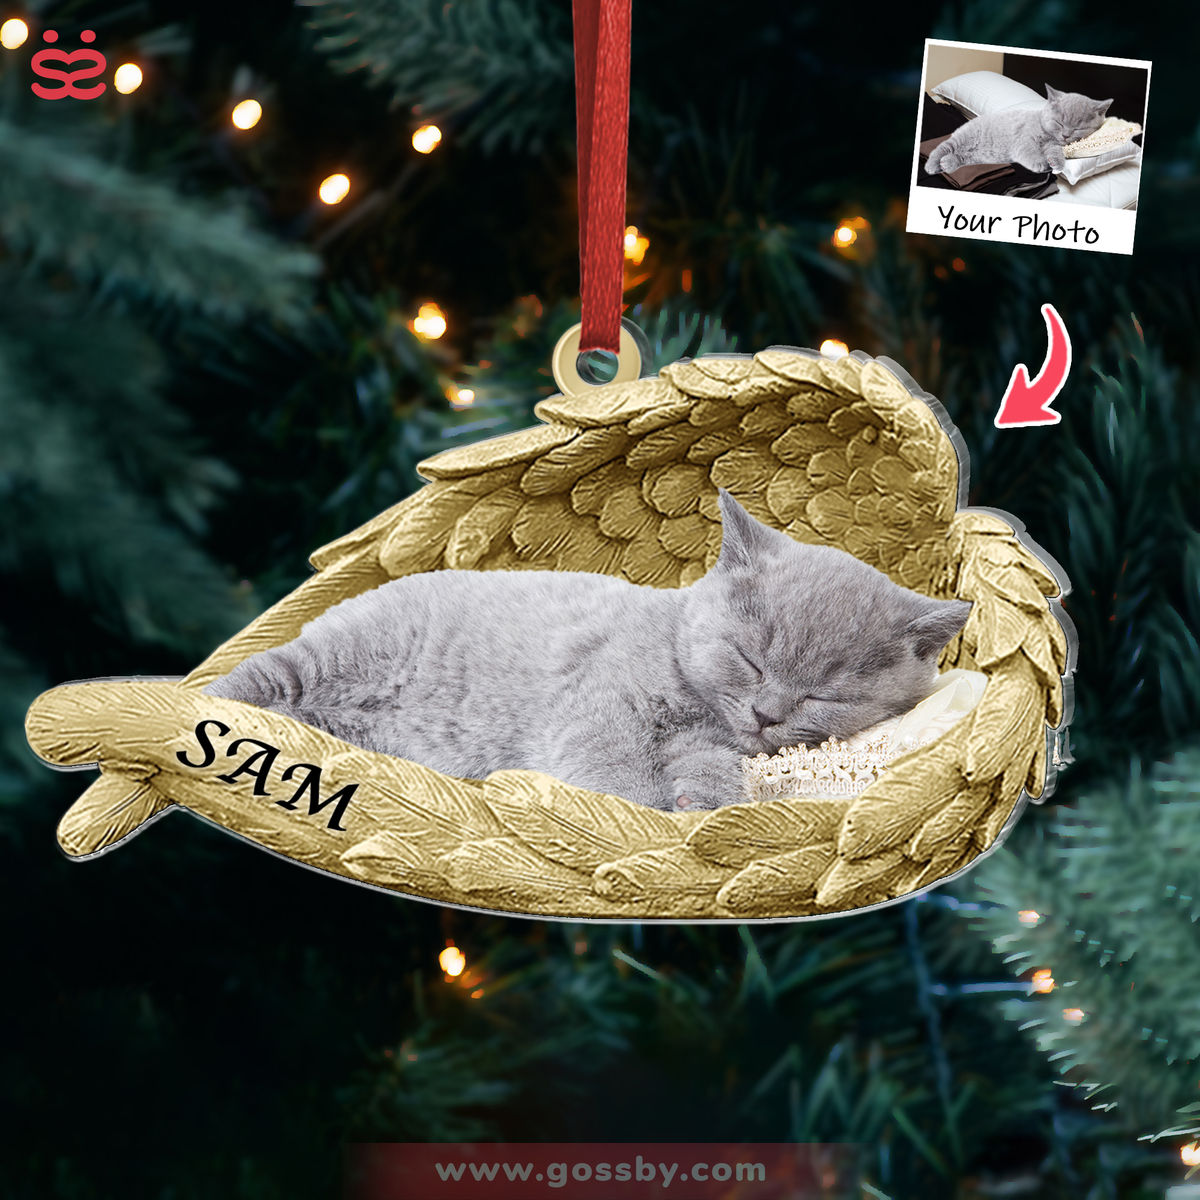 Cat Acrylic Ornament - Customized Your Photo Ornament - Sleeping